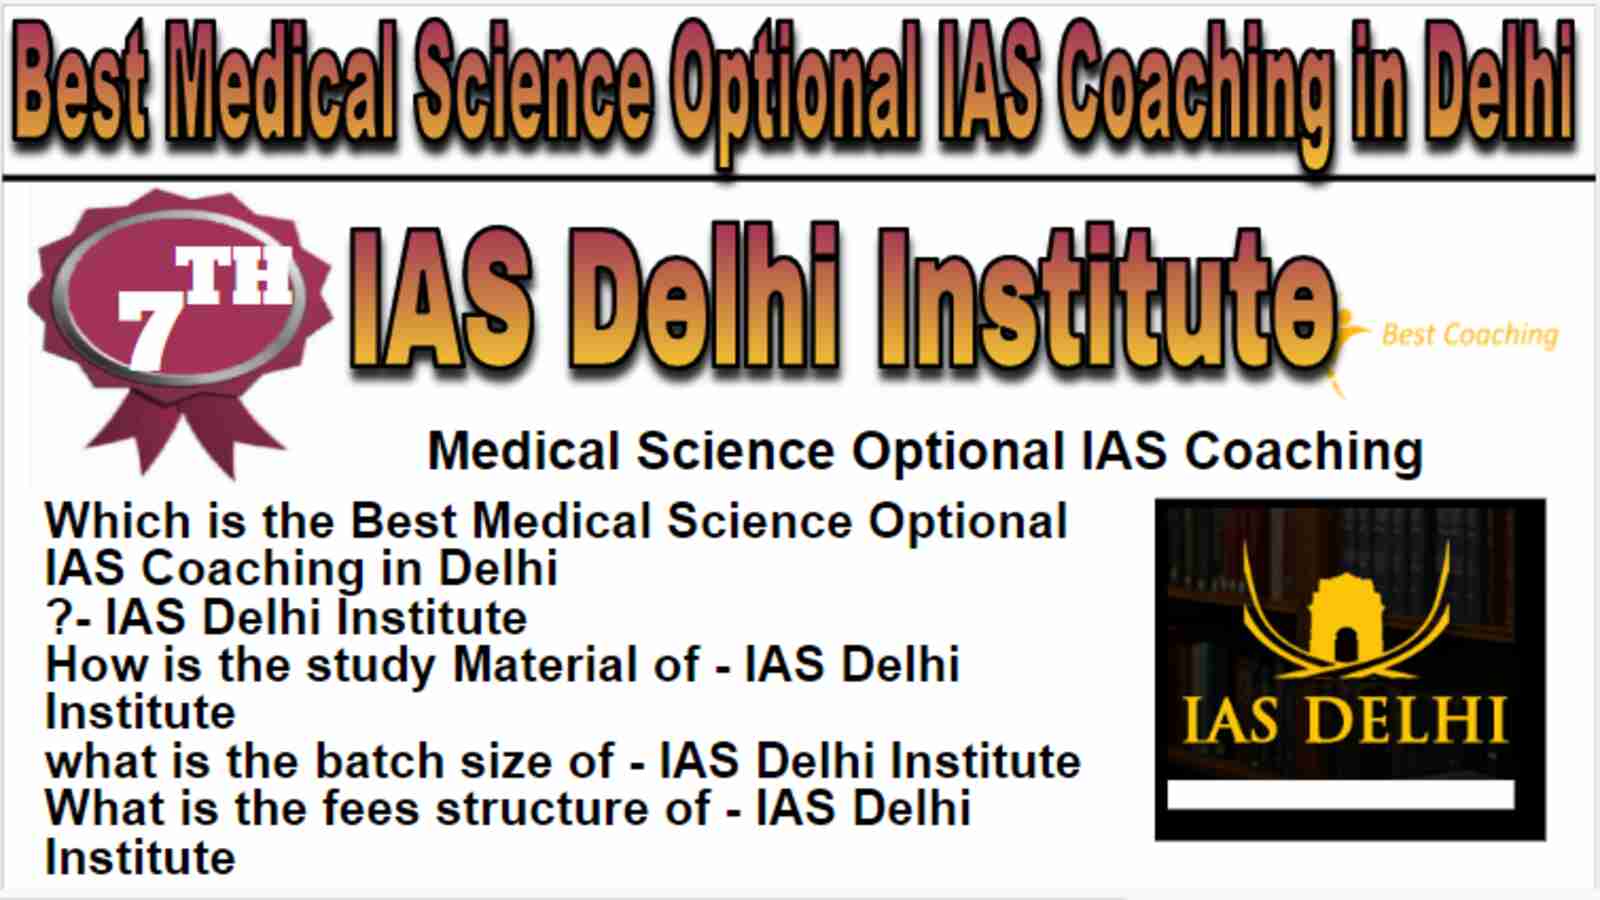 Best Medical Science Optional IAS Coaching in Delhi